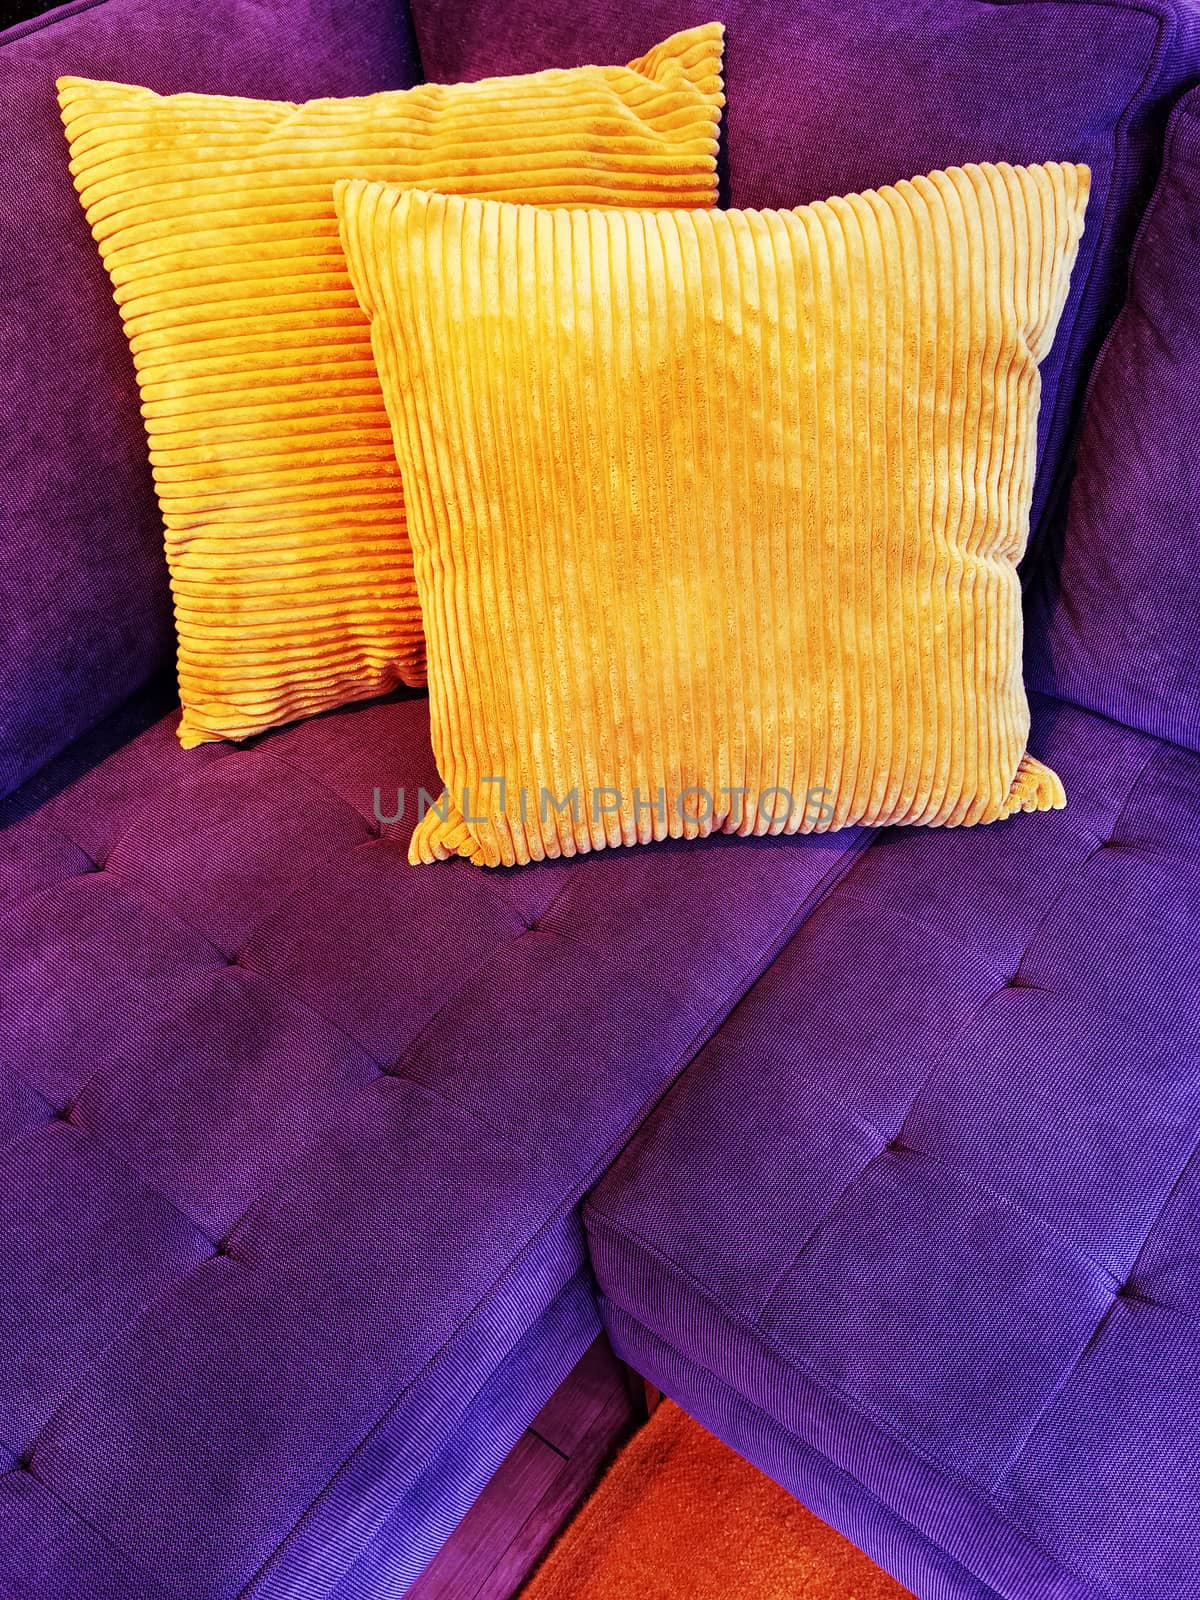 Vibrant purple sofa decorated with two orange cushions.